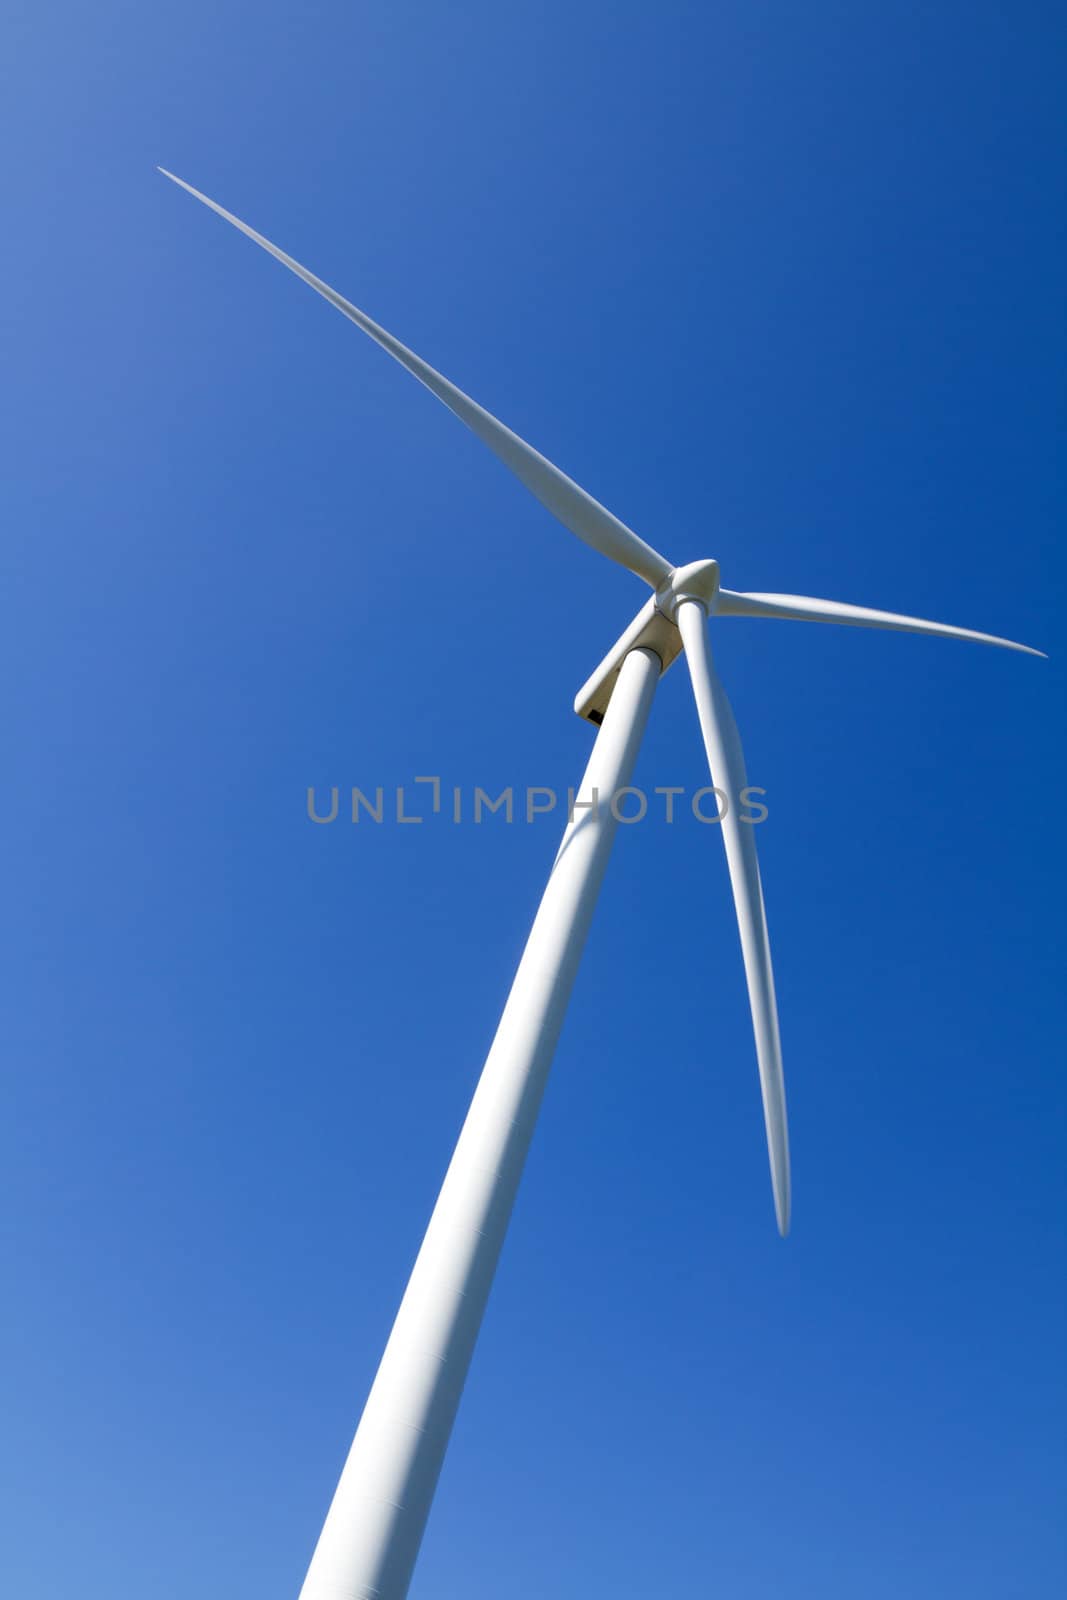 Wind turbine under clear blue sky by chrisroll